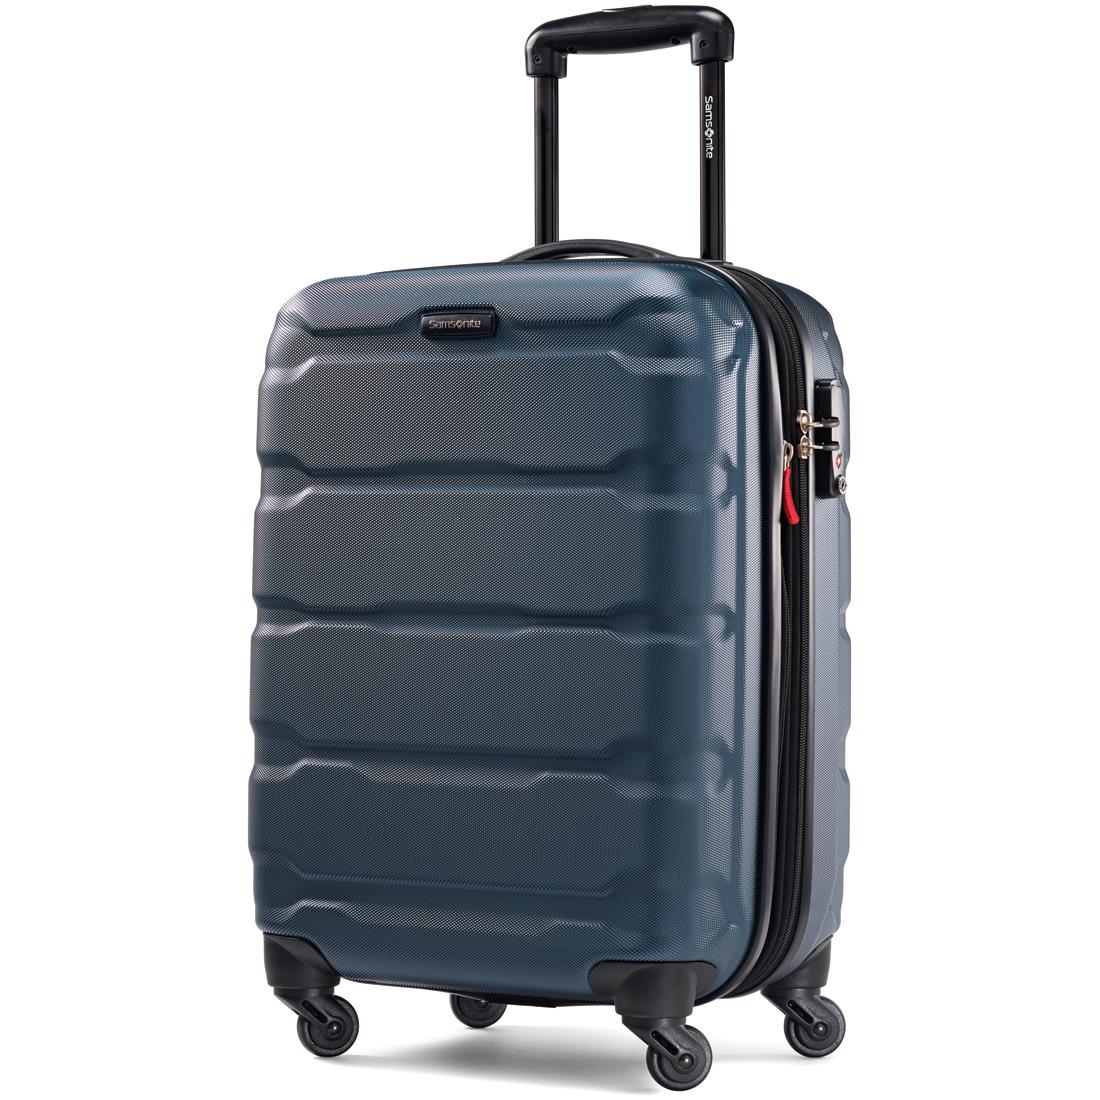 Samsonite Omni 20 Inch Hardside Spinner Luggage Suitcase Teal (68308-2824)